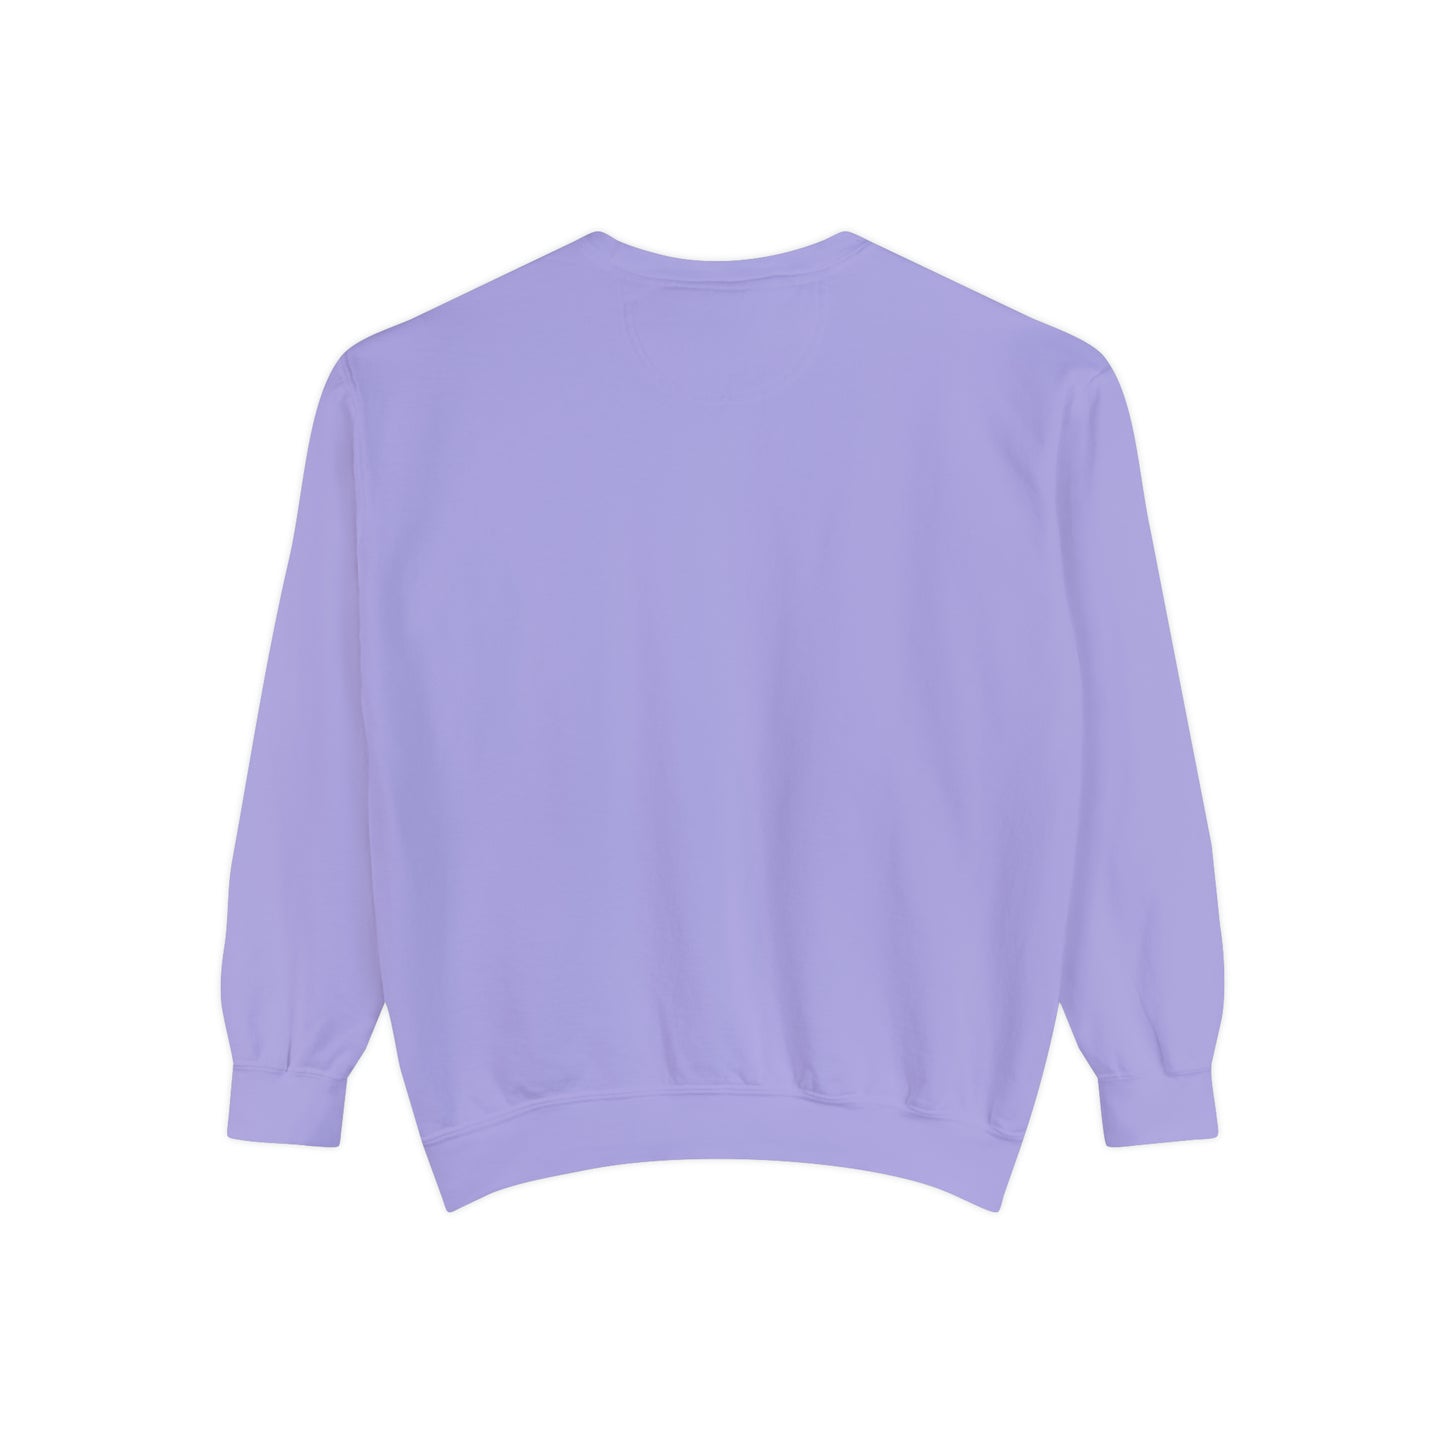 Fighter - logo - Unisex Garment-Dyed Sweatshirt